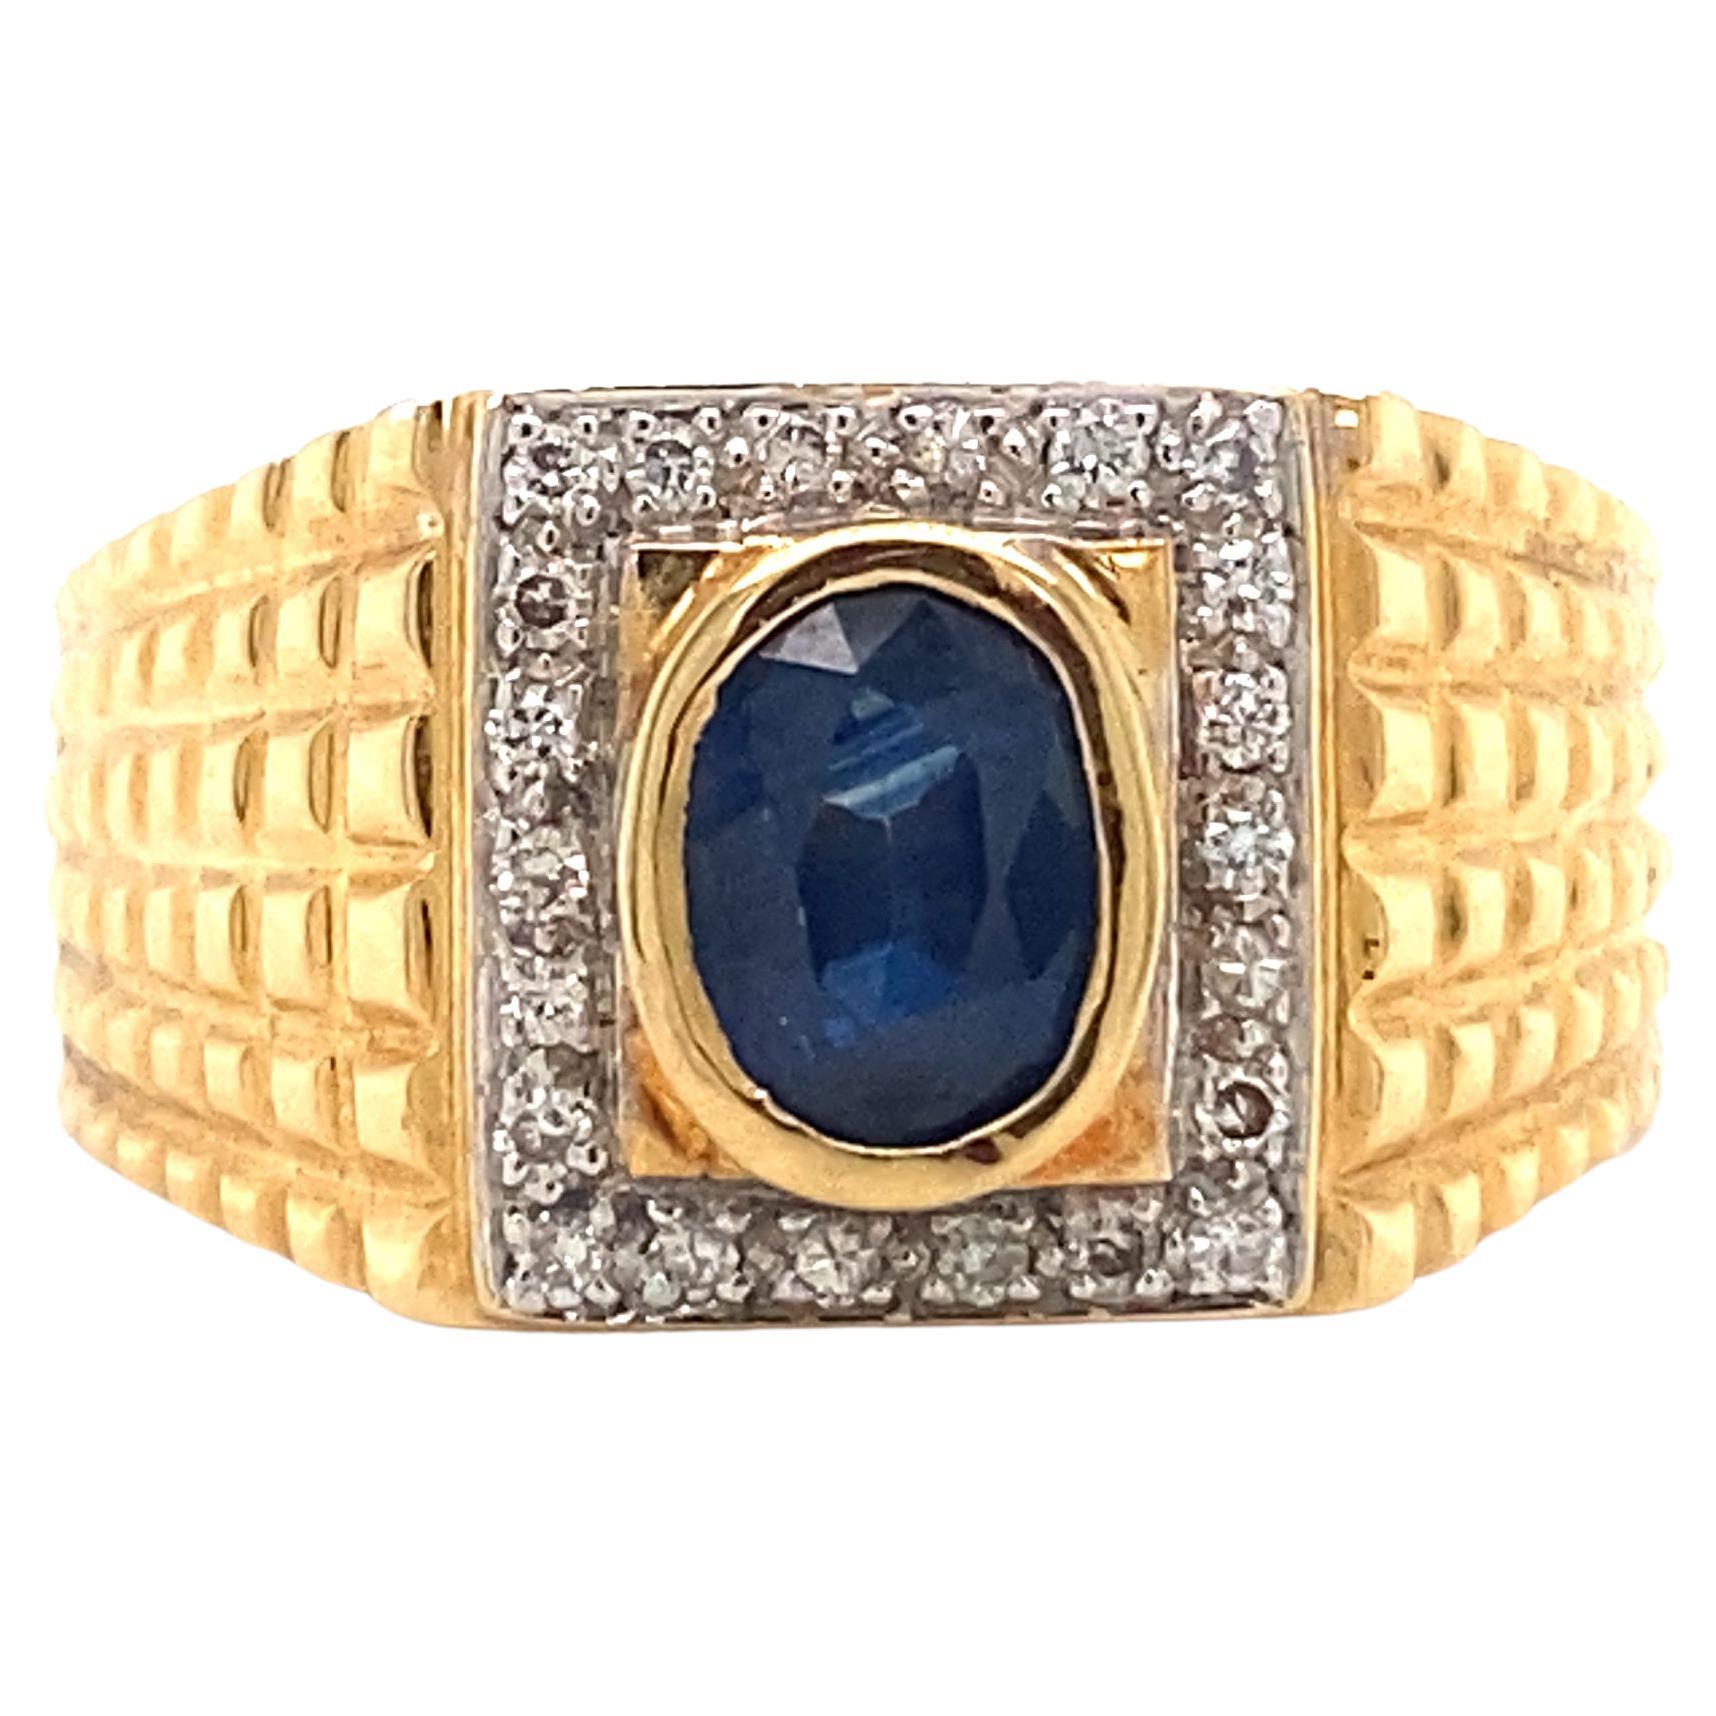 Circa 1990's Le Vian Sapphire and Diamond Ring Set in 18 Karat Yellow Gold